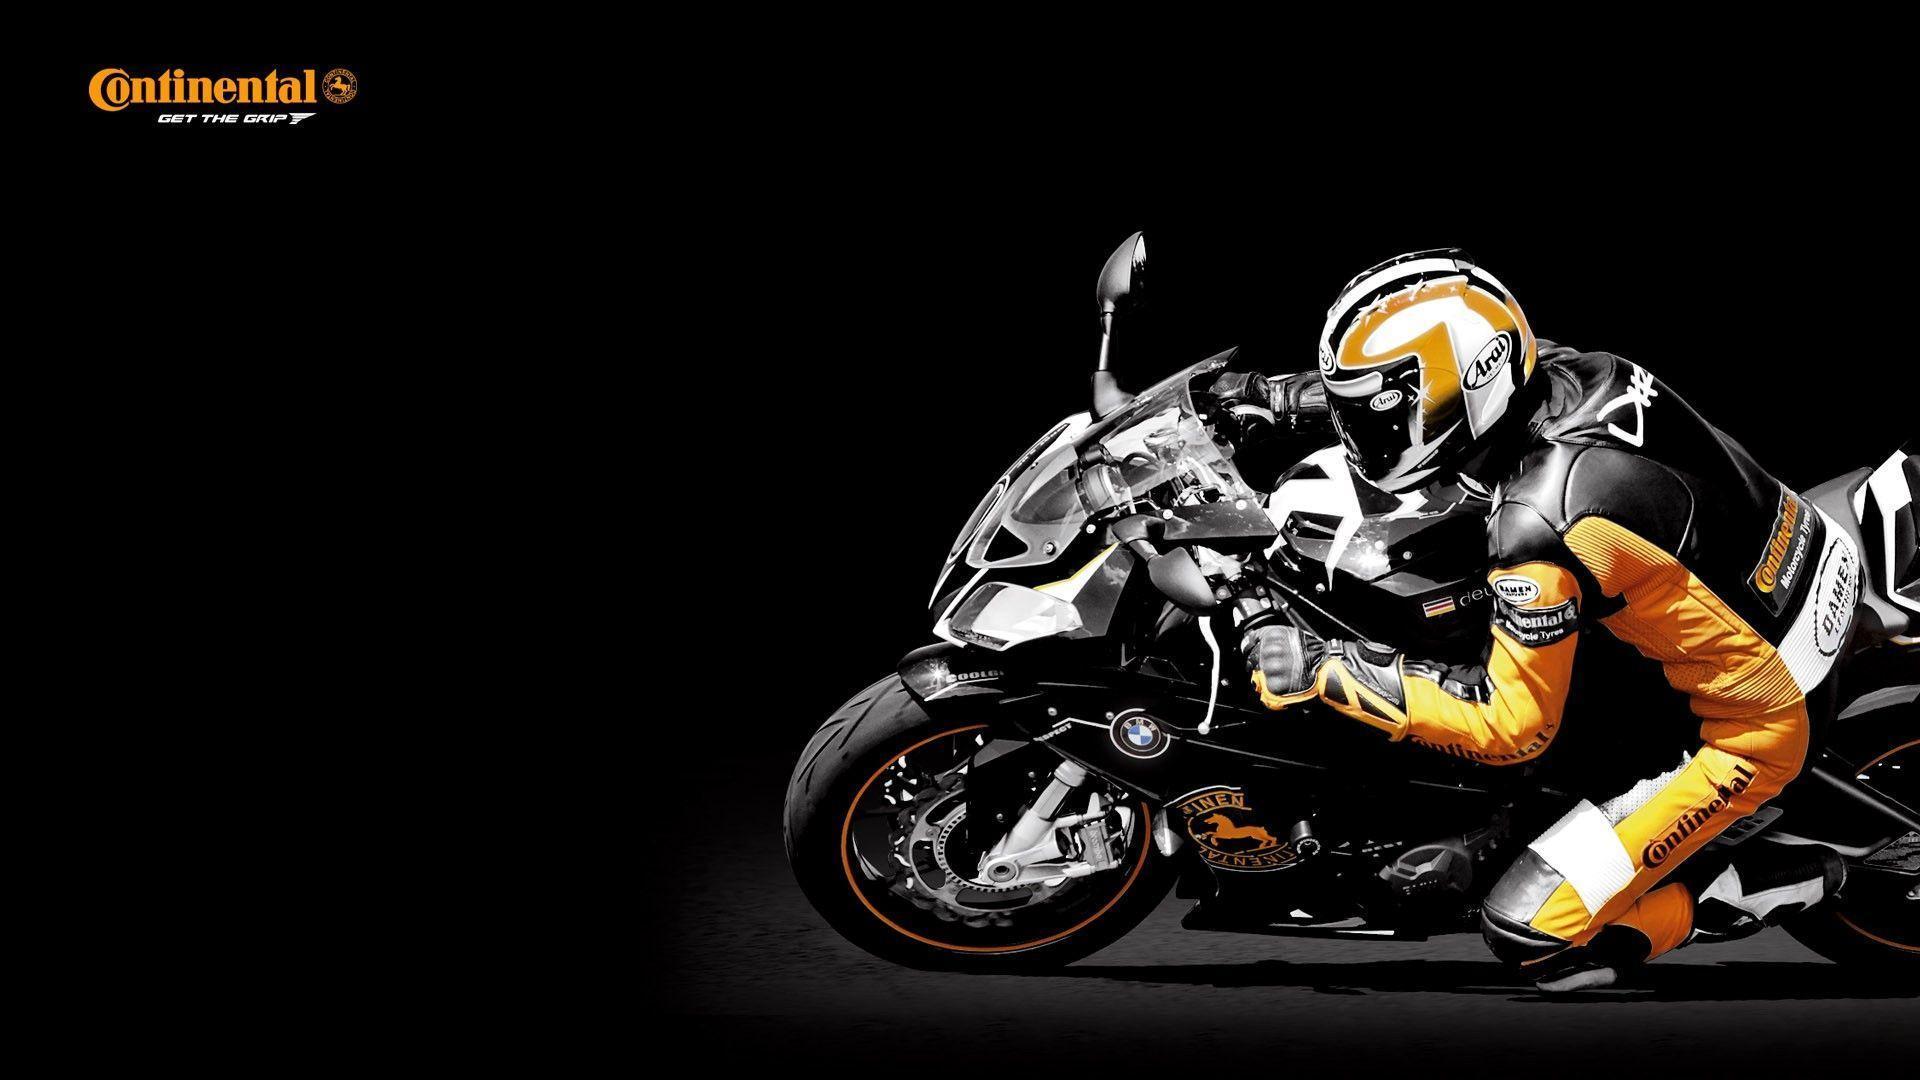 BMW Motorbike Wallpaper, iPhone Wallpaper, Facebook Cover, Twitter